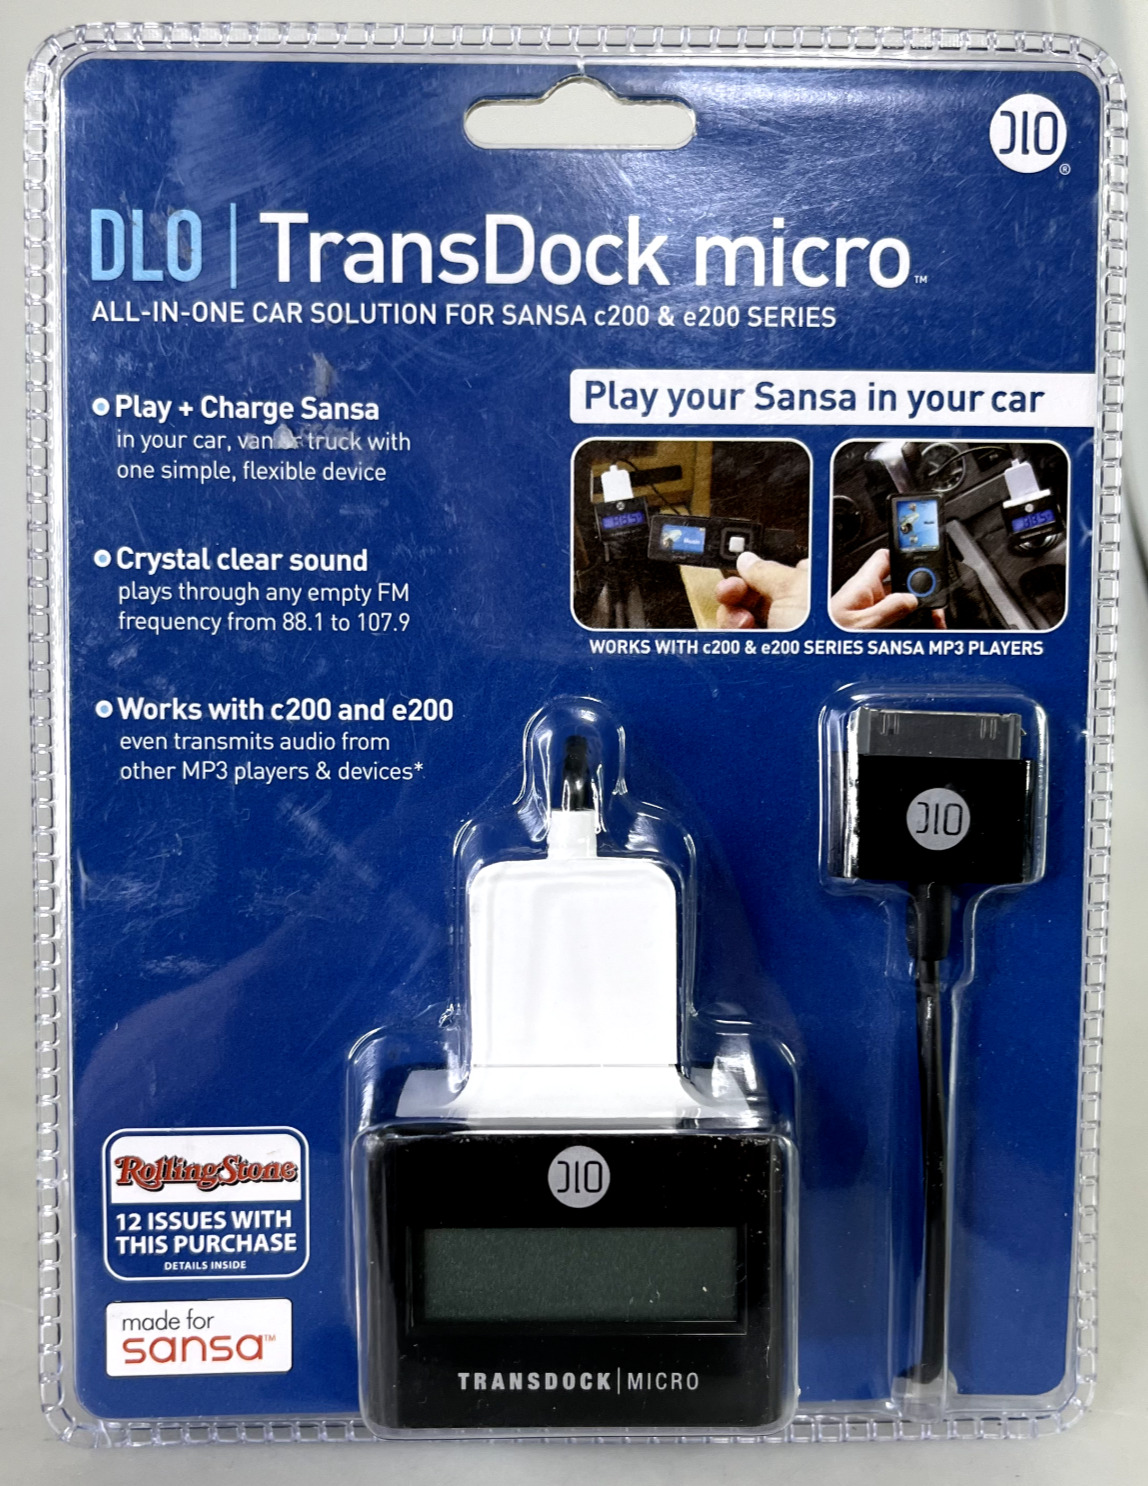 DLO TransDock Micro for Sansa FM Transmitter VERY RARE NIB